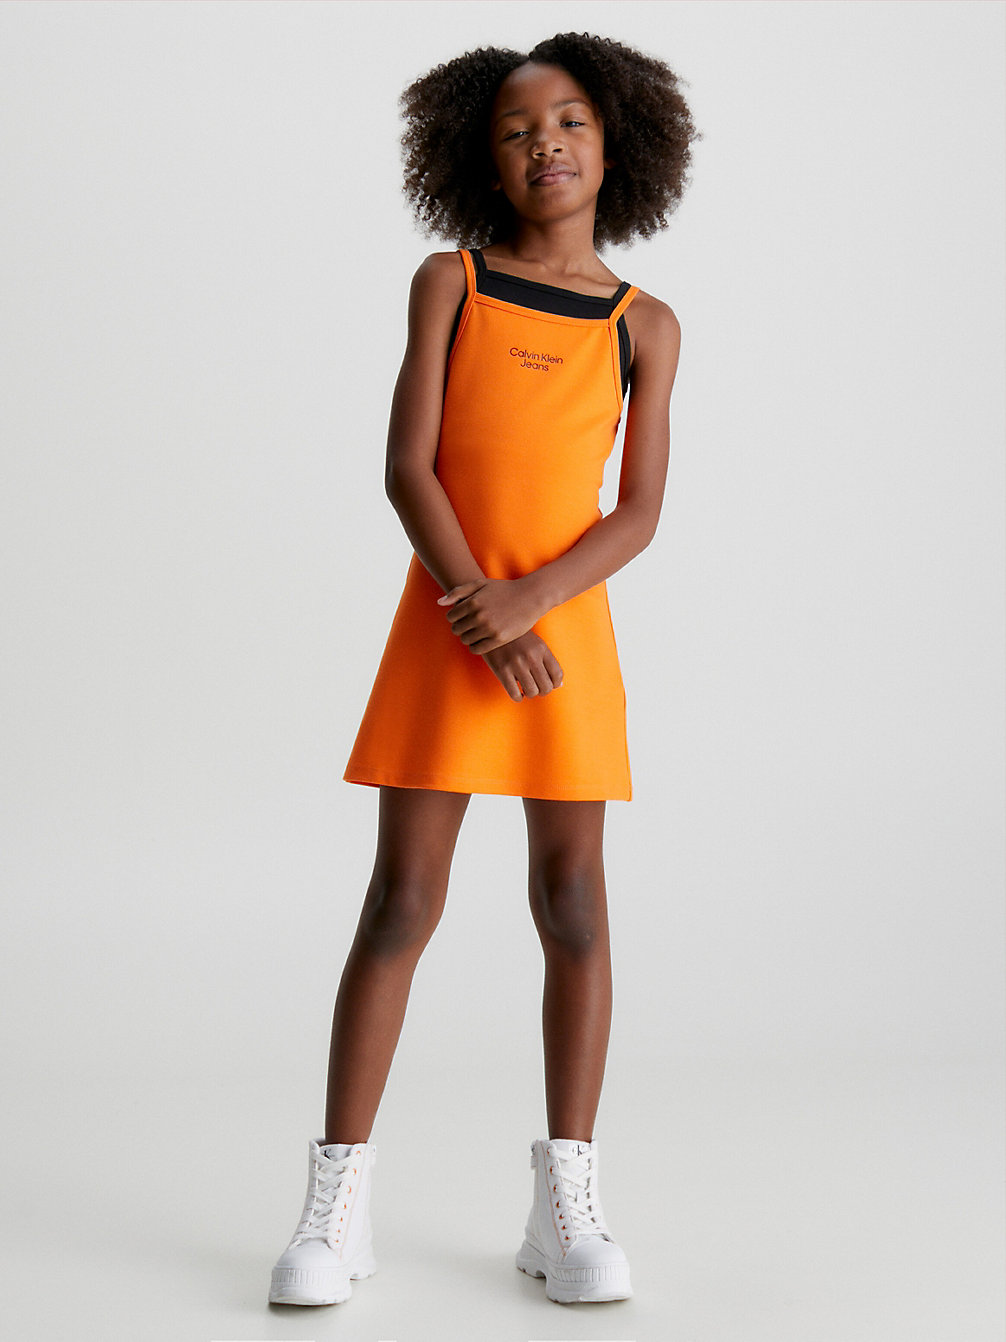 VIBRANT ORANGE Milano Slip Dress undefined girls Calvin Klein